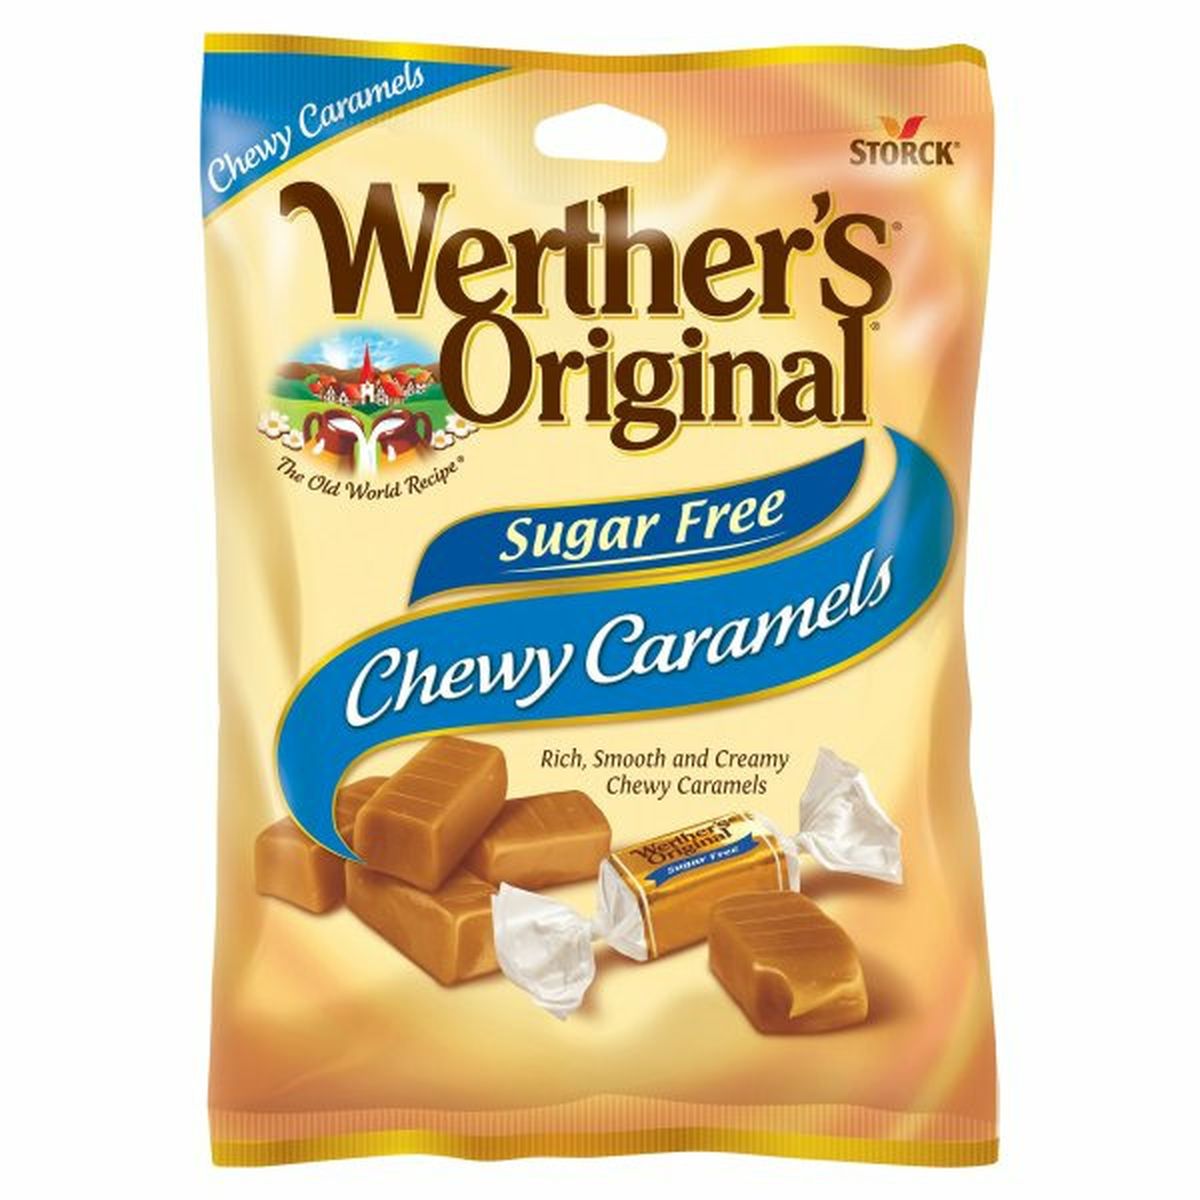 Calories in Werther's Original Original Chewy Caramels, Sugar Free